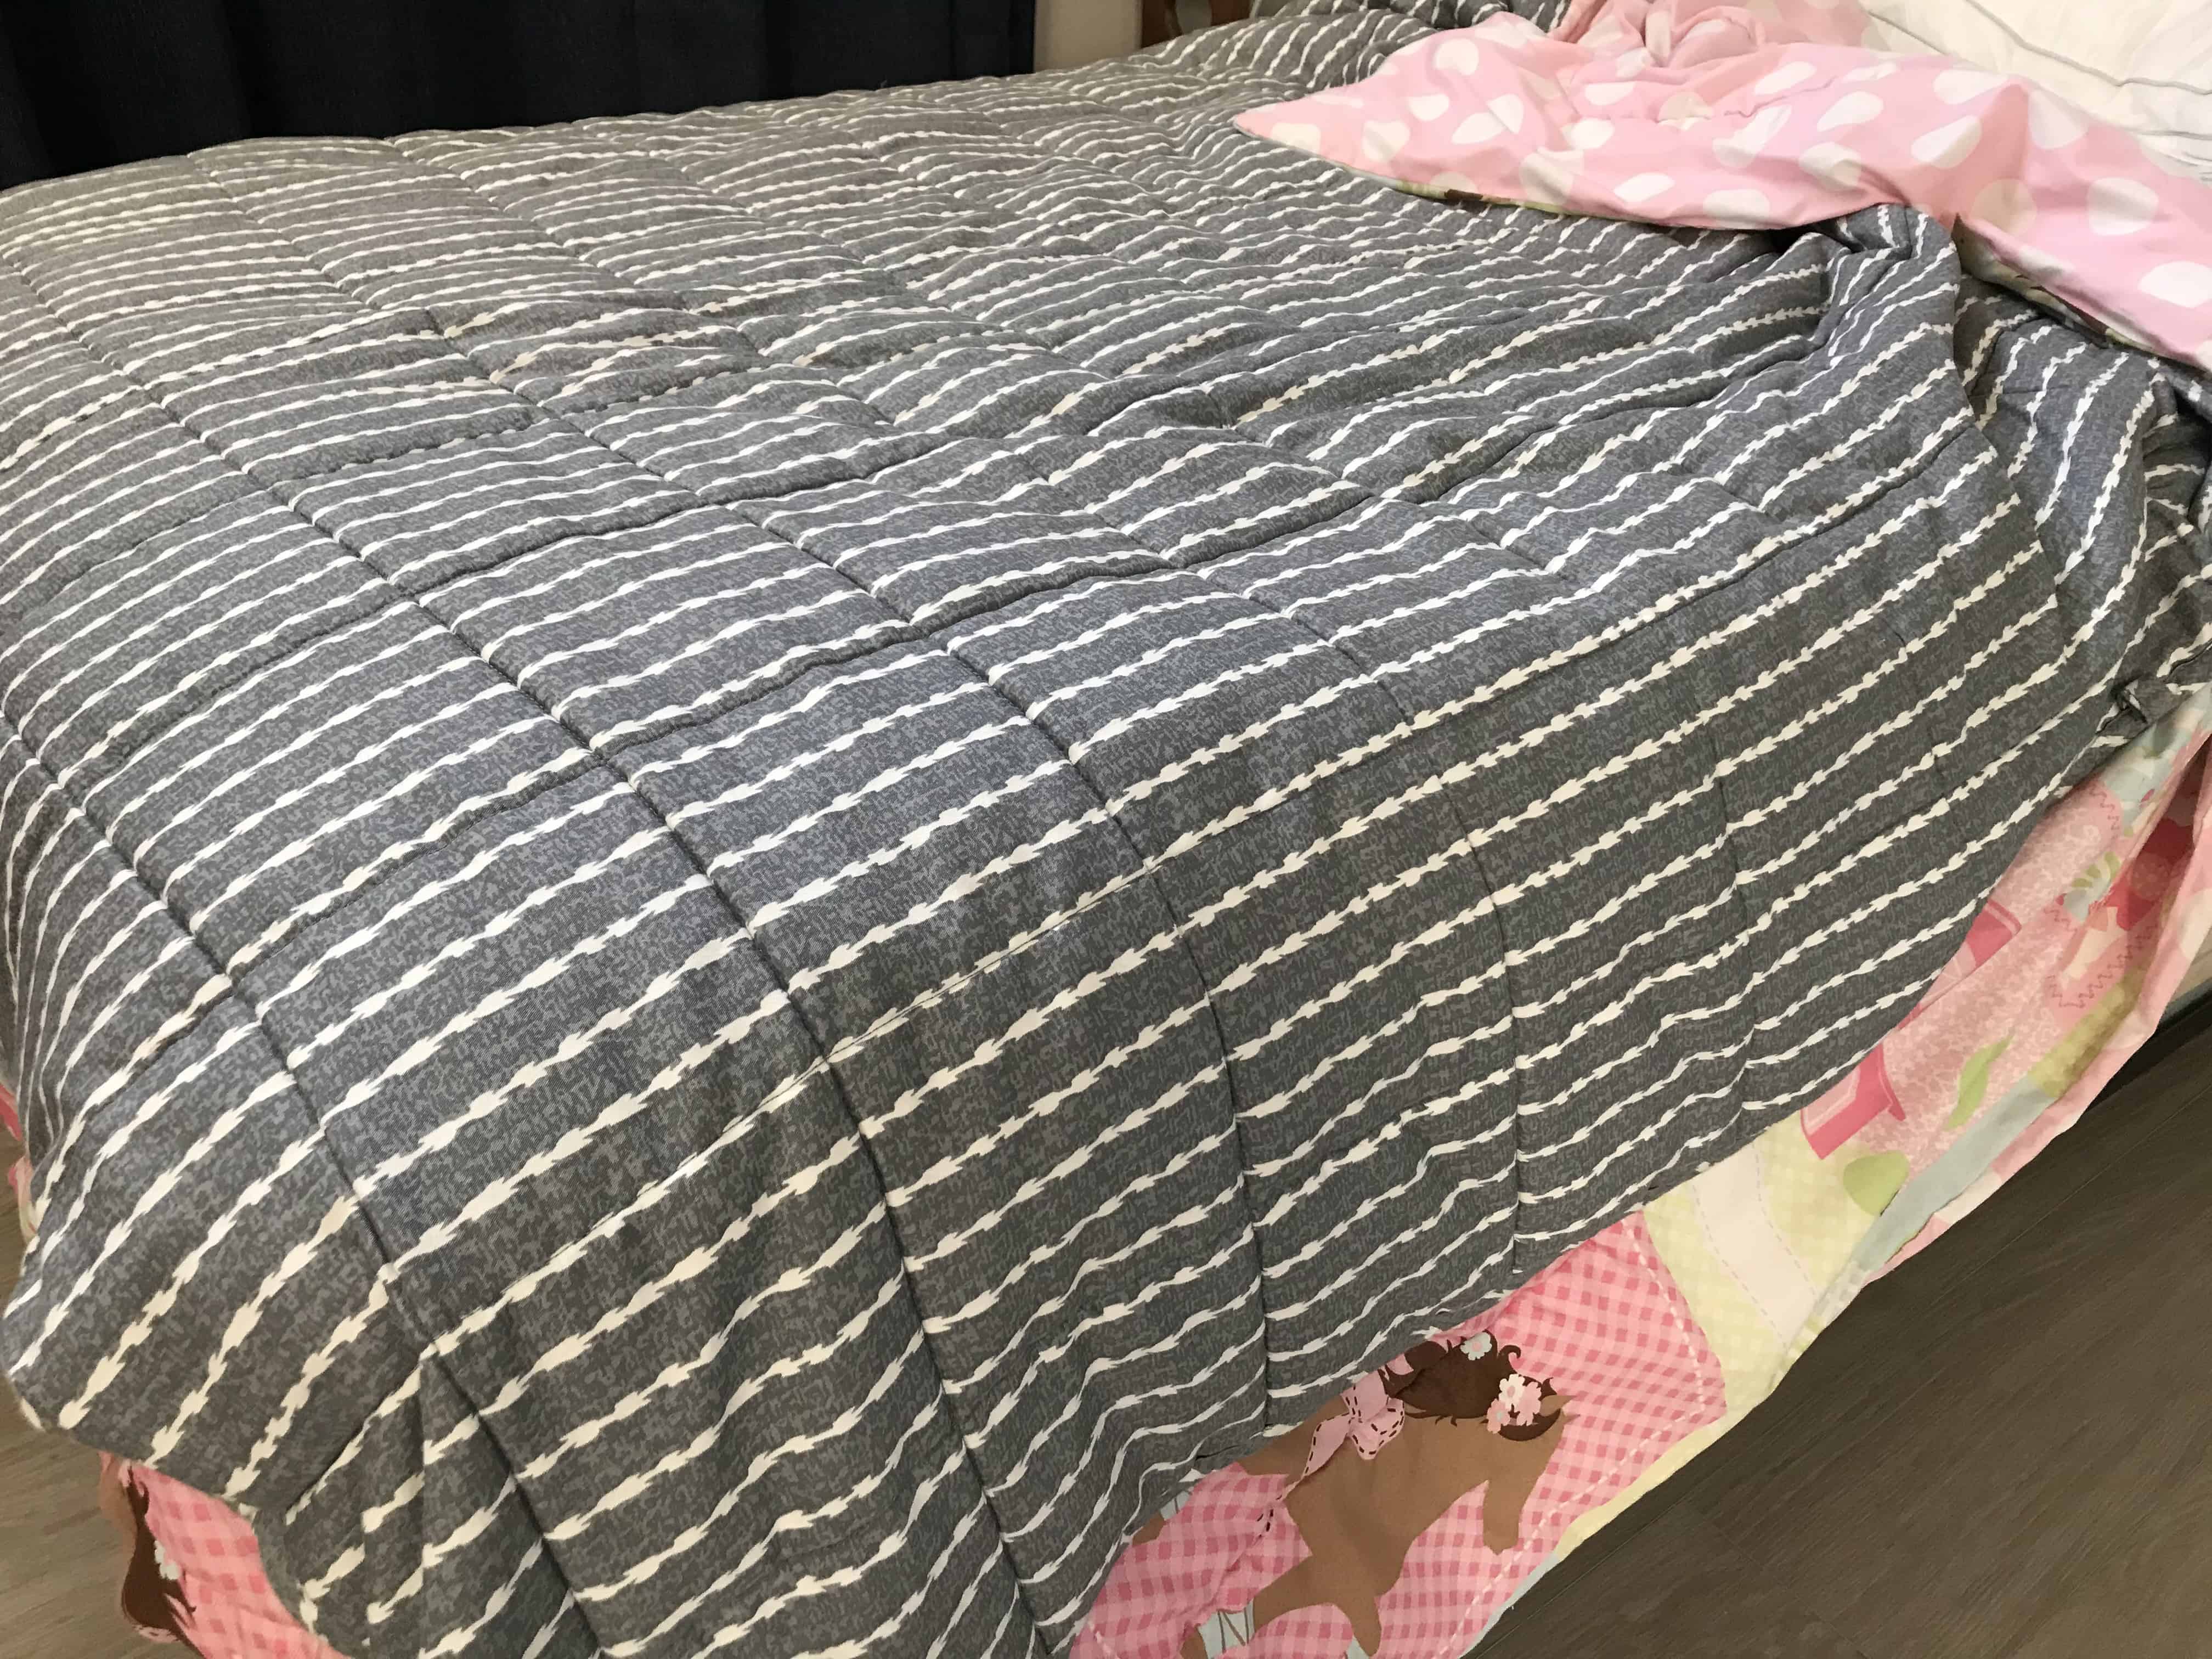 gray blanket on top of pink comforter